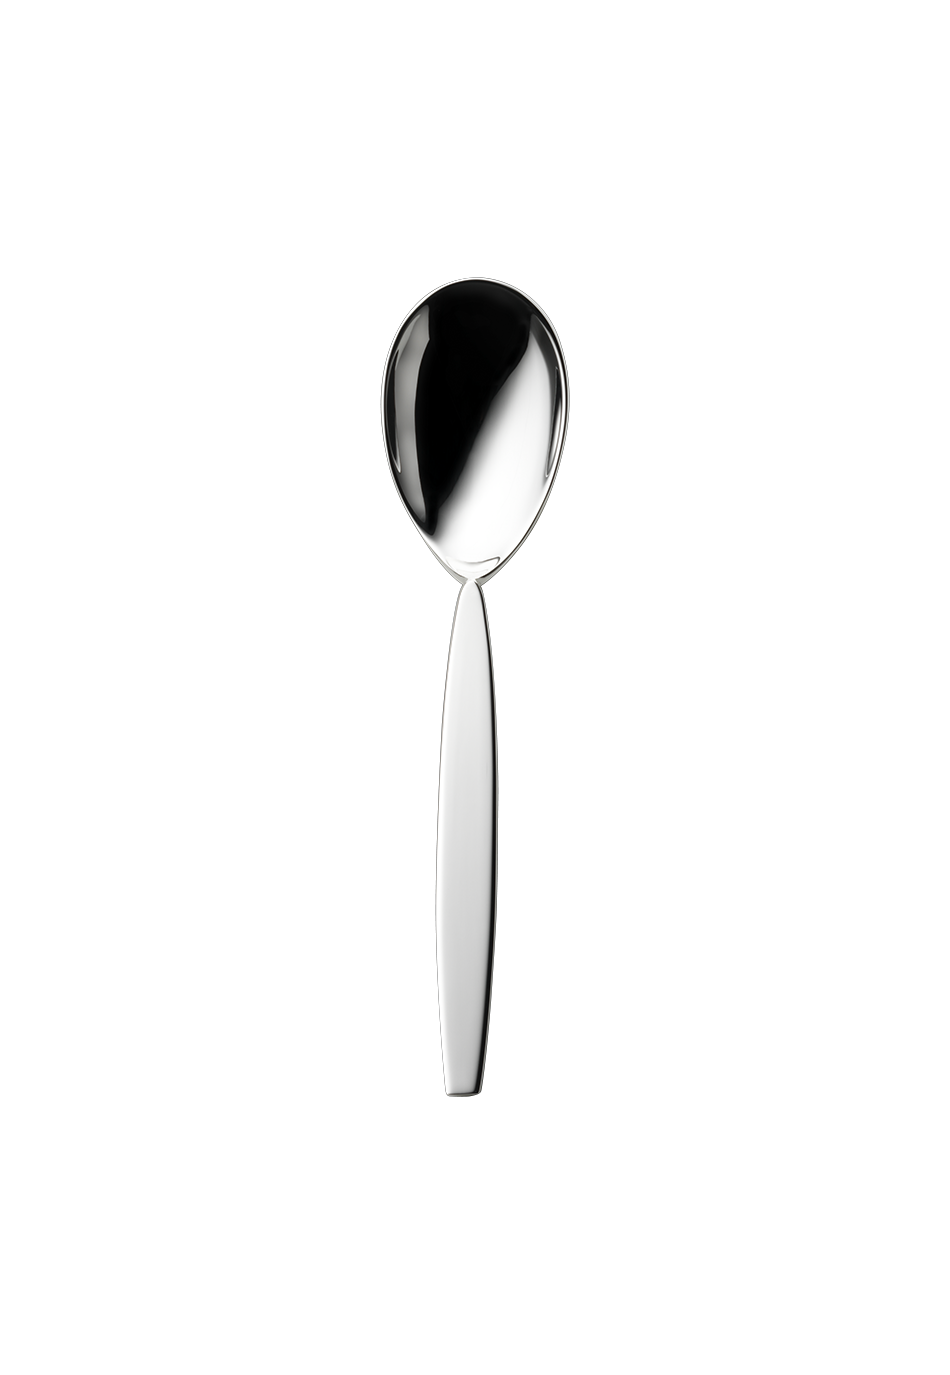 12" Cream Spoon (Broth Spoon) (150g massive silverplated)